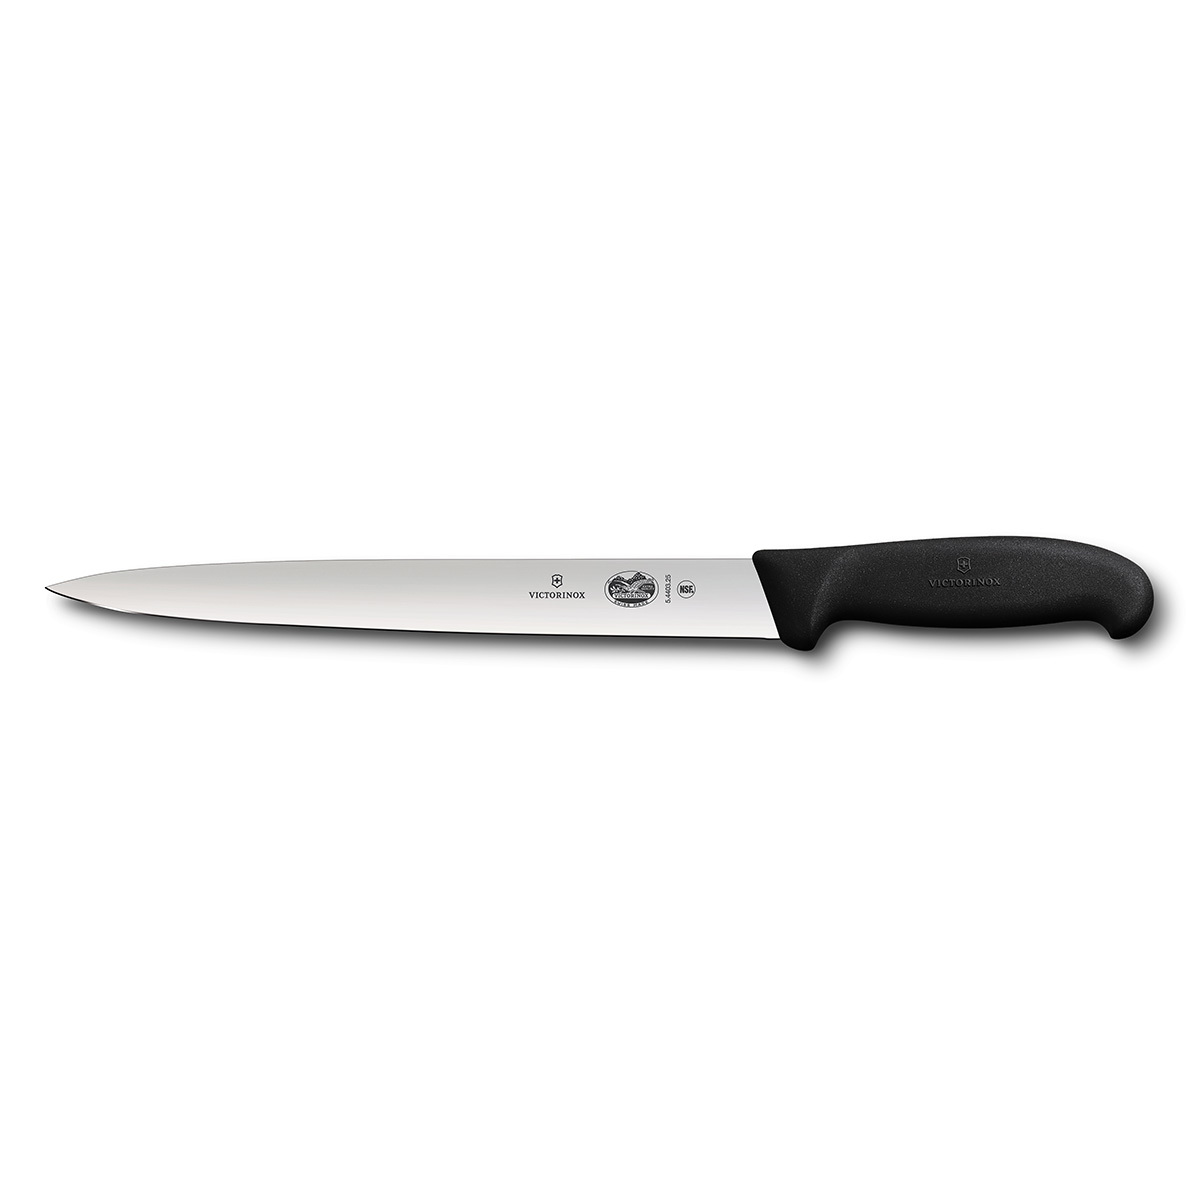 Кухонный нож для тонкой резки Victorinox 5.4403.25 кухонный обвалочный нож victorinox 5 6303 15